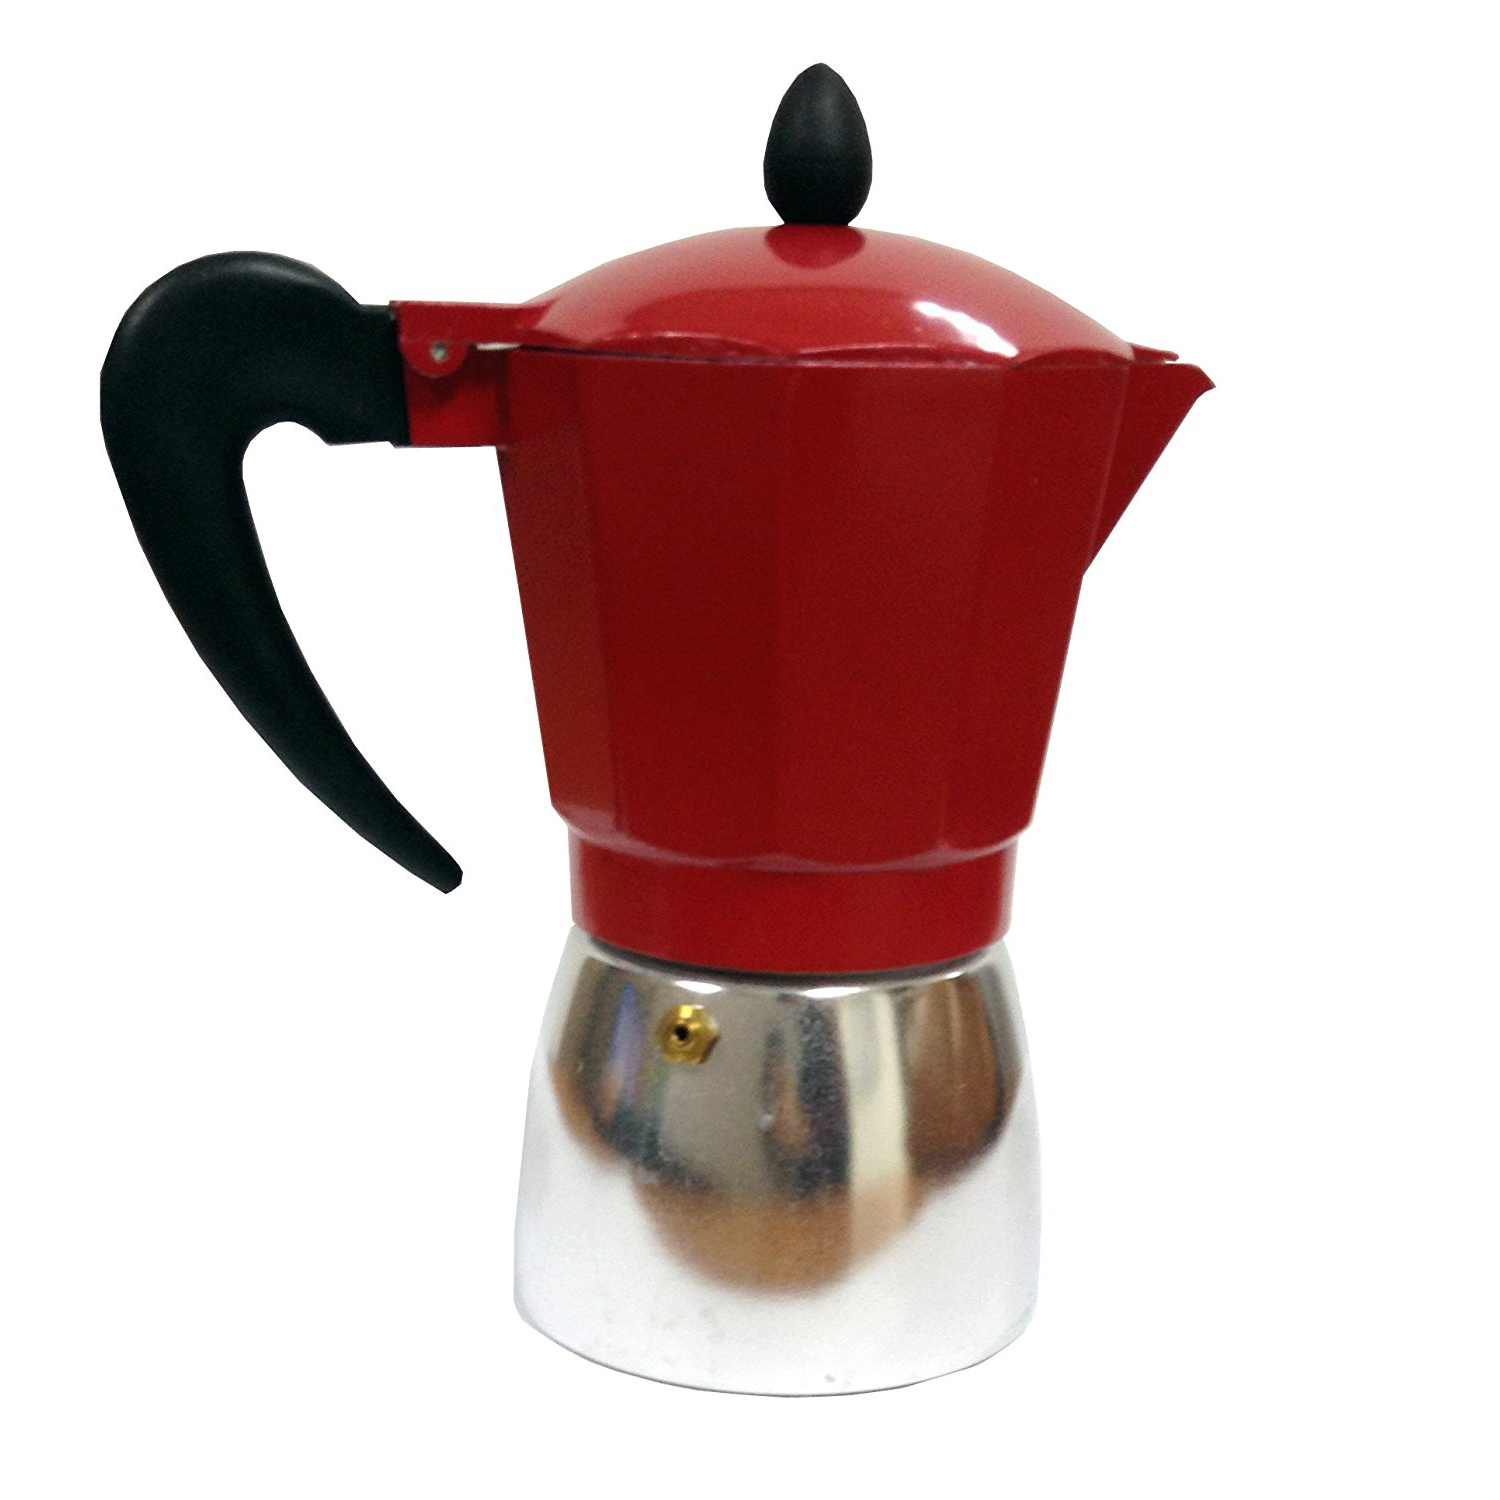 IMUSA IMUSA Aluminum Coffeemaker 6 Cup, Red - IMUSA